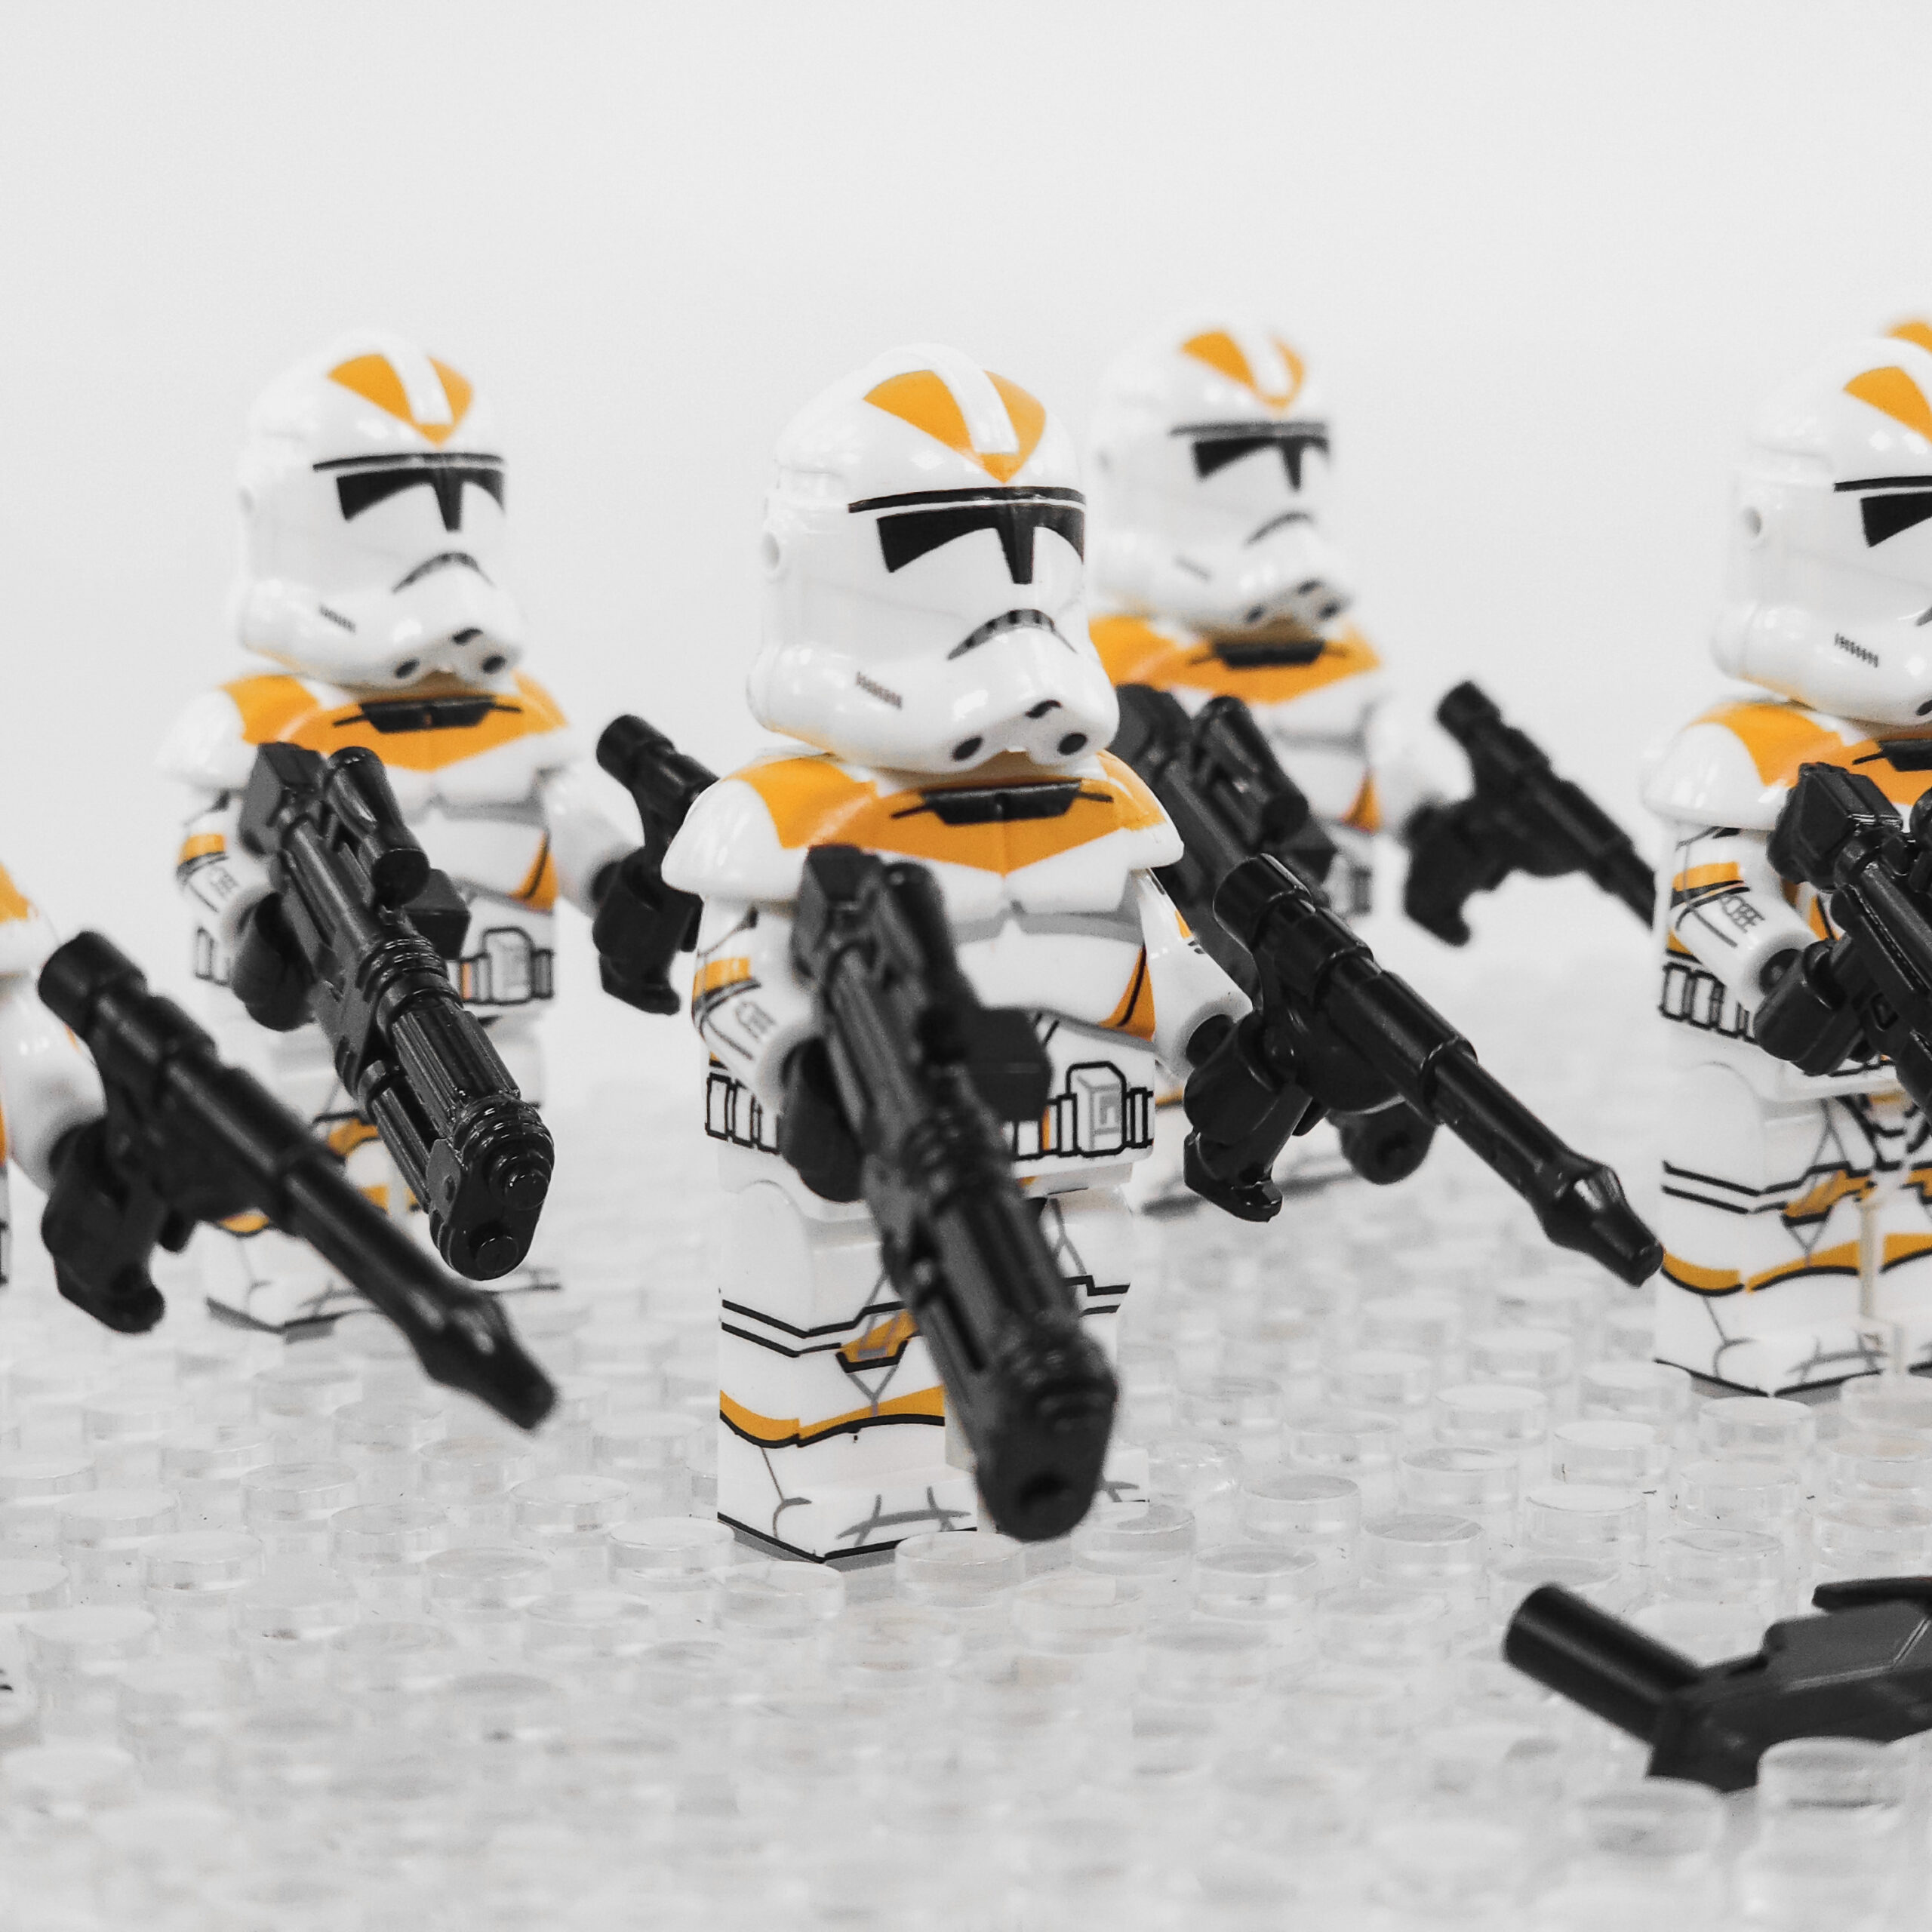 LEGO Star Wars 212th Clone Trooper Minifigure Lot of 5 Attack